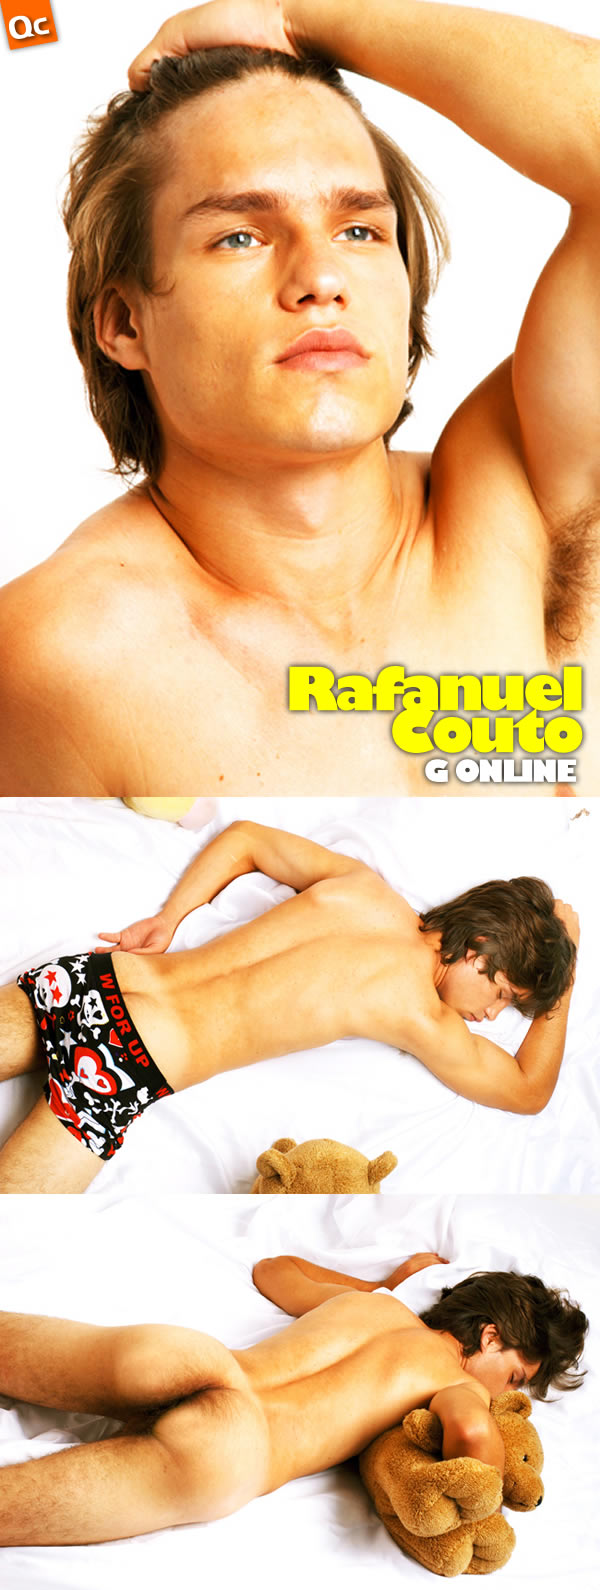 G Online: Rafanuel Couto (1)